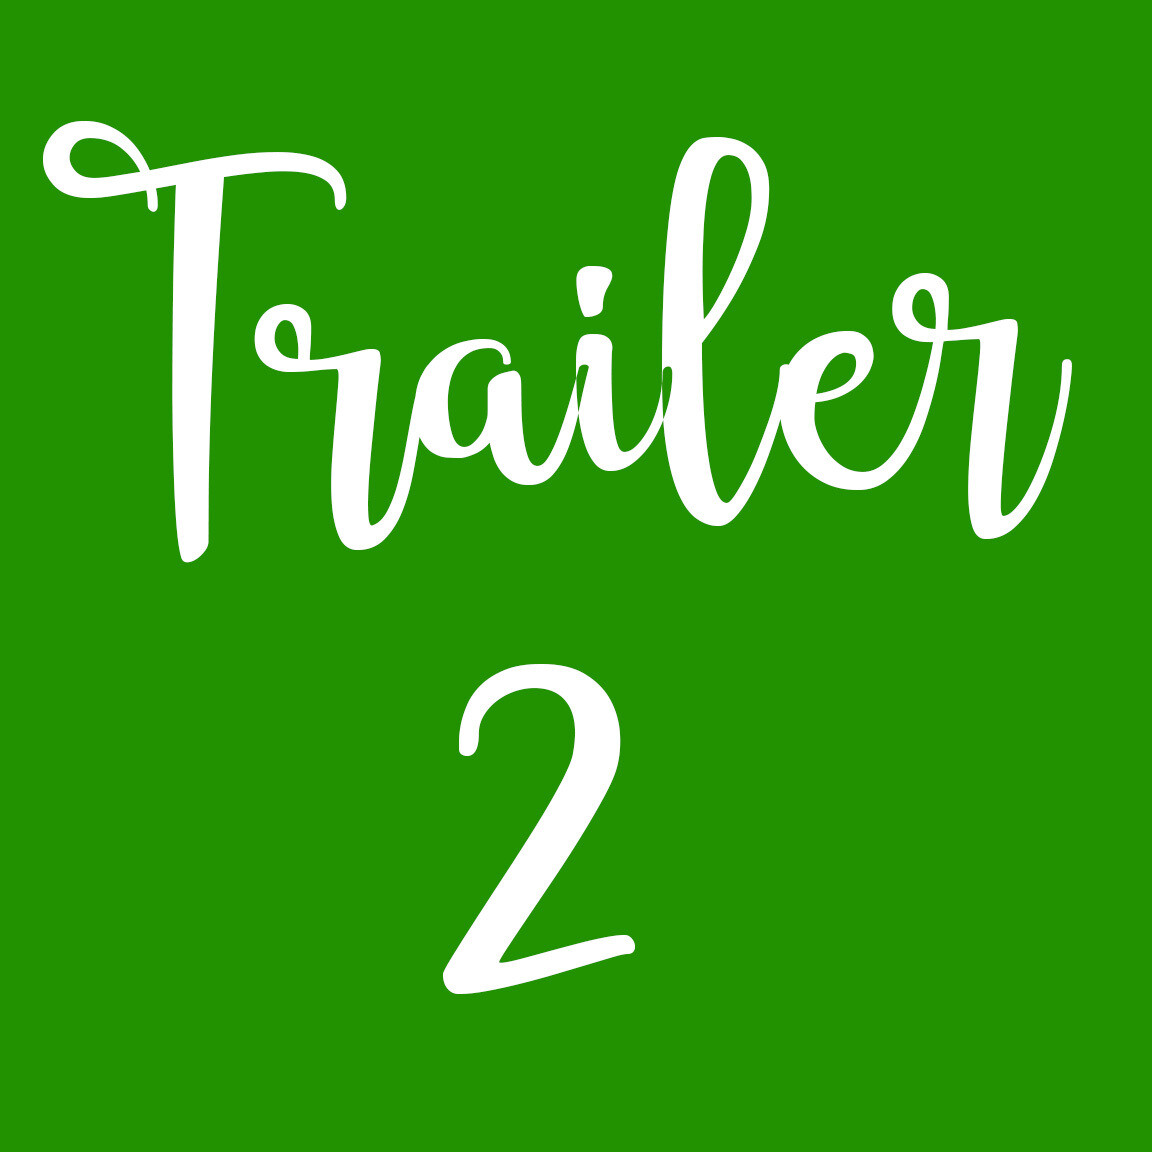 Trailer 2, Trailer 3 - December 13th @ 6pm